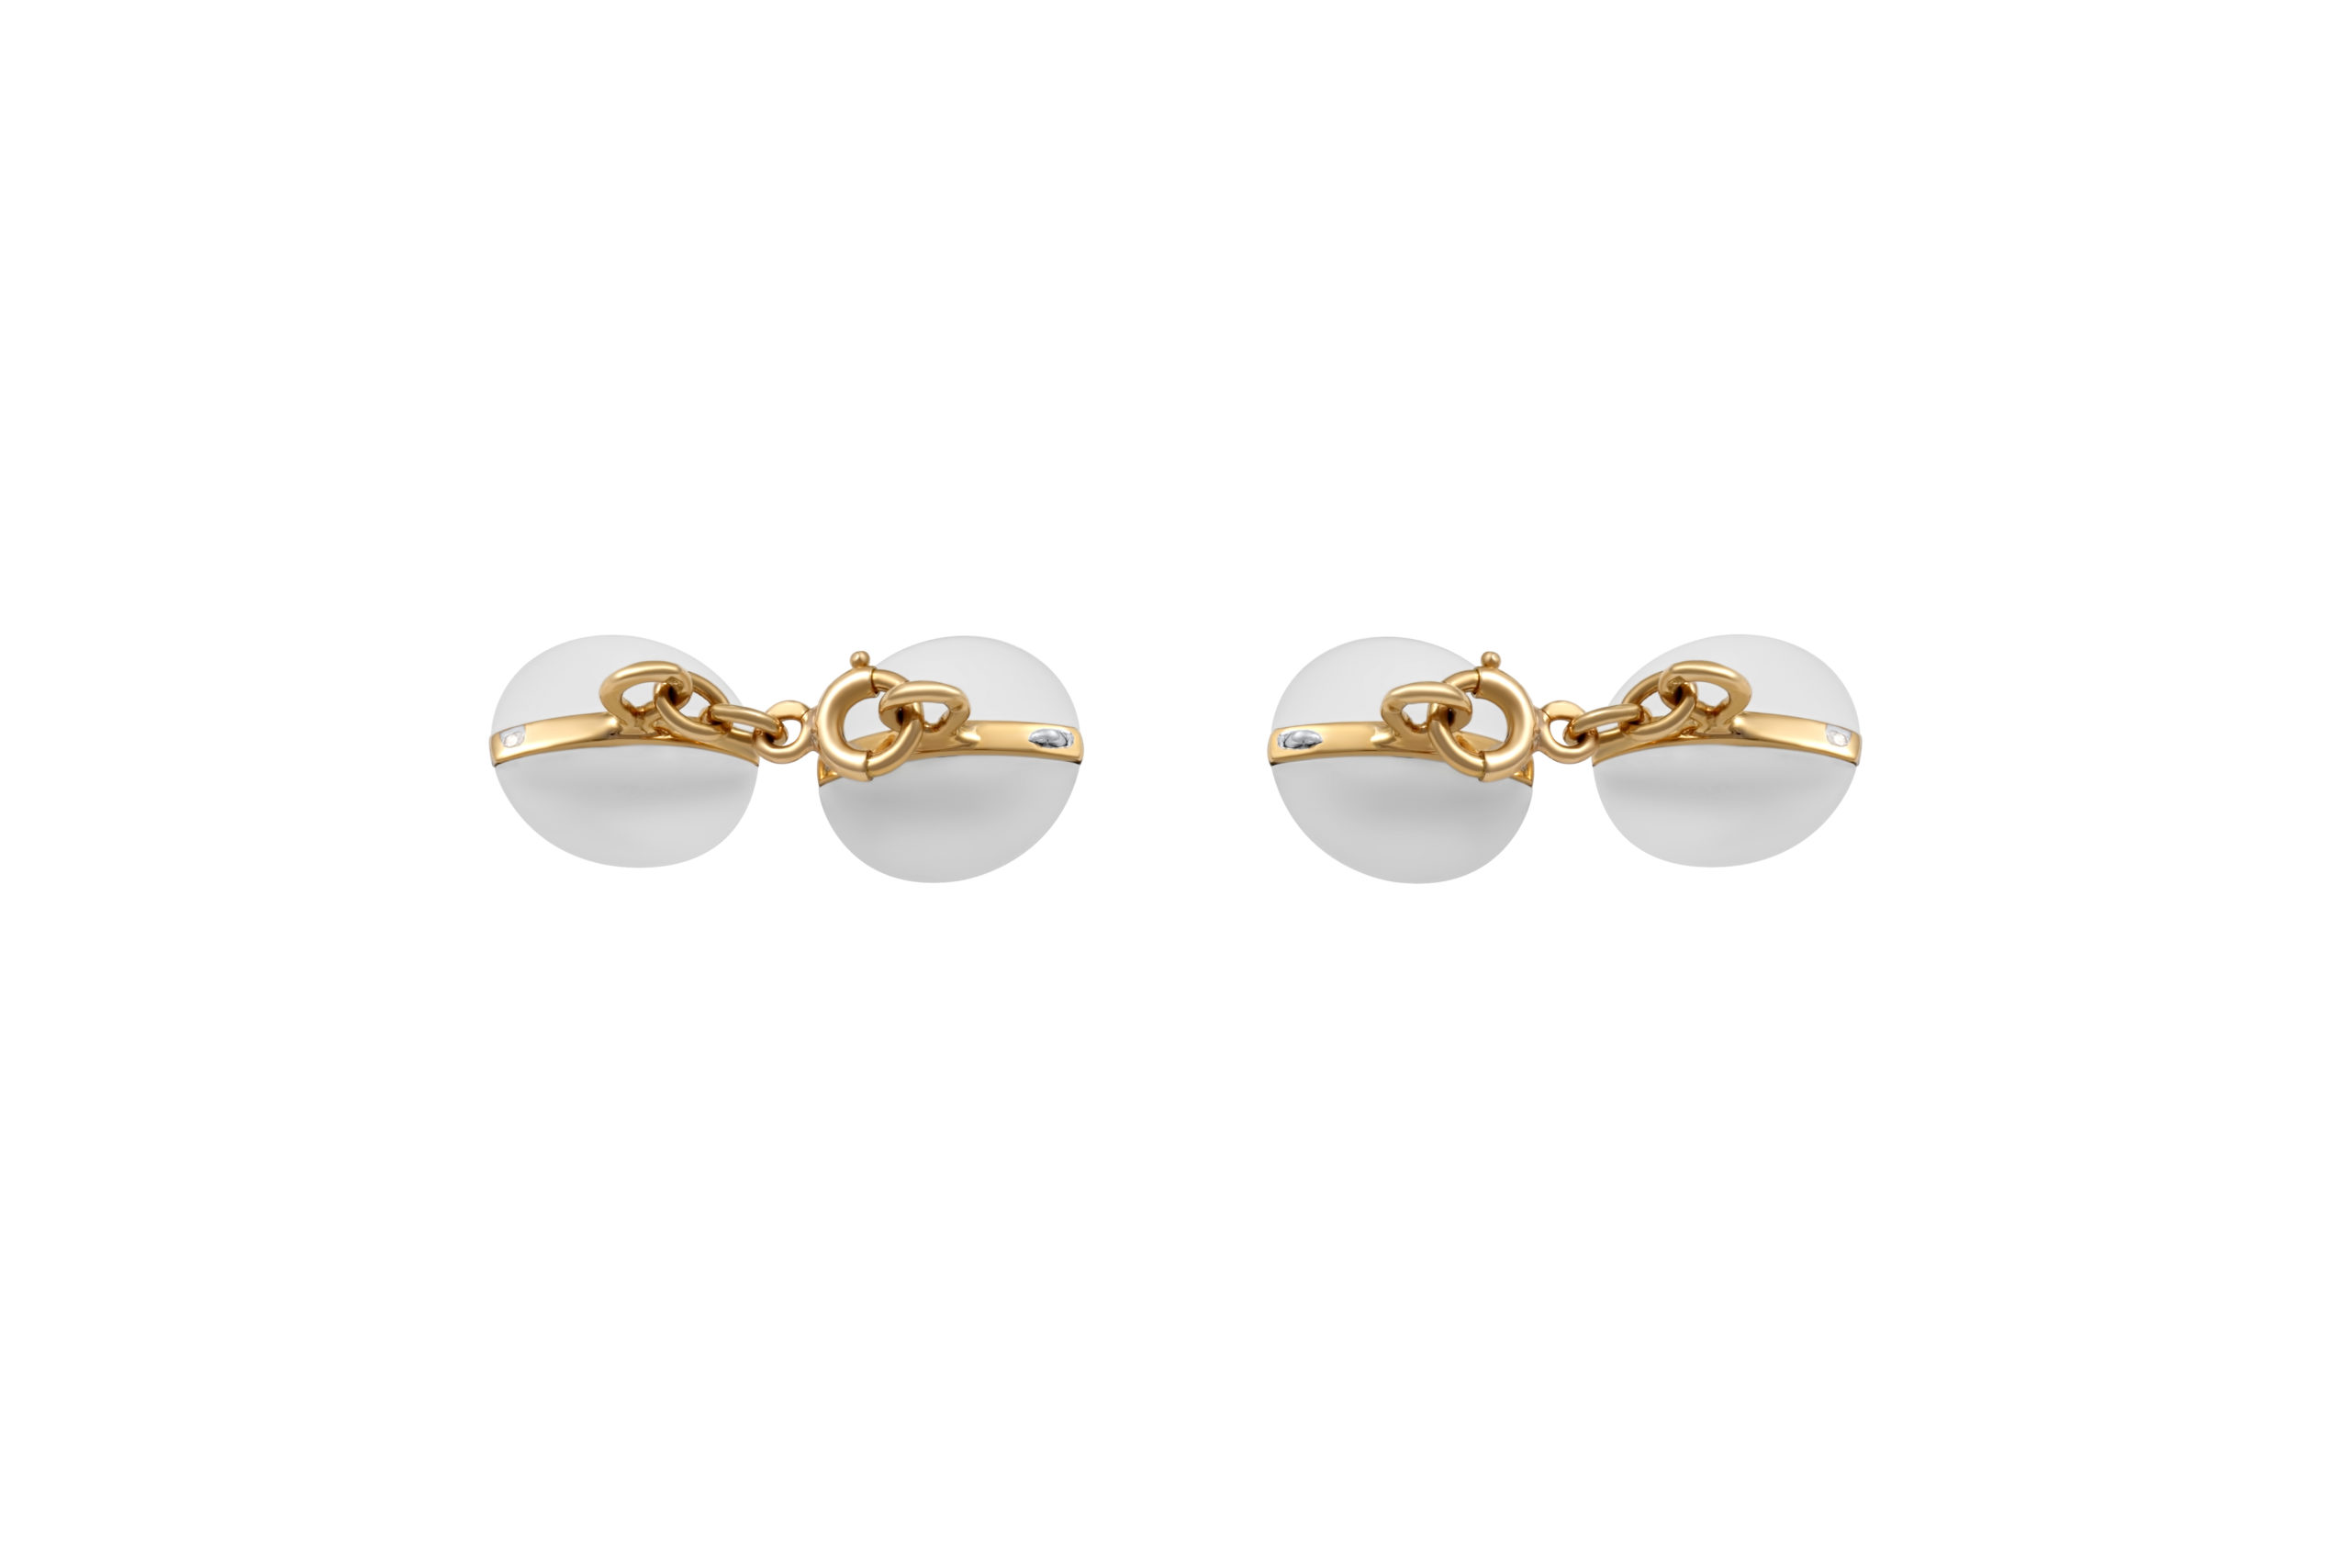 CROG000726 - Love Motif cufflinks - White gold, coral and diamonds - Cartier